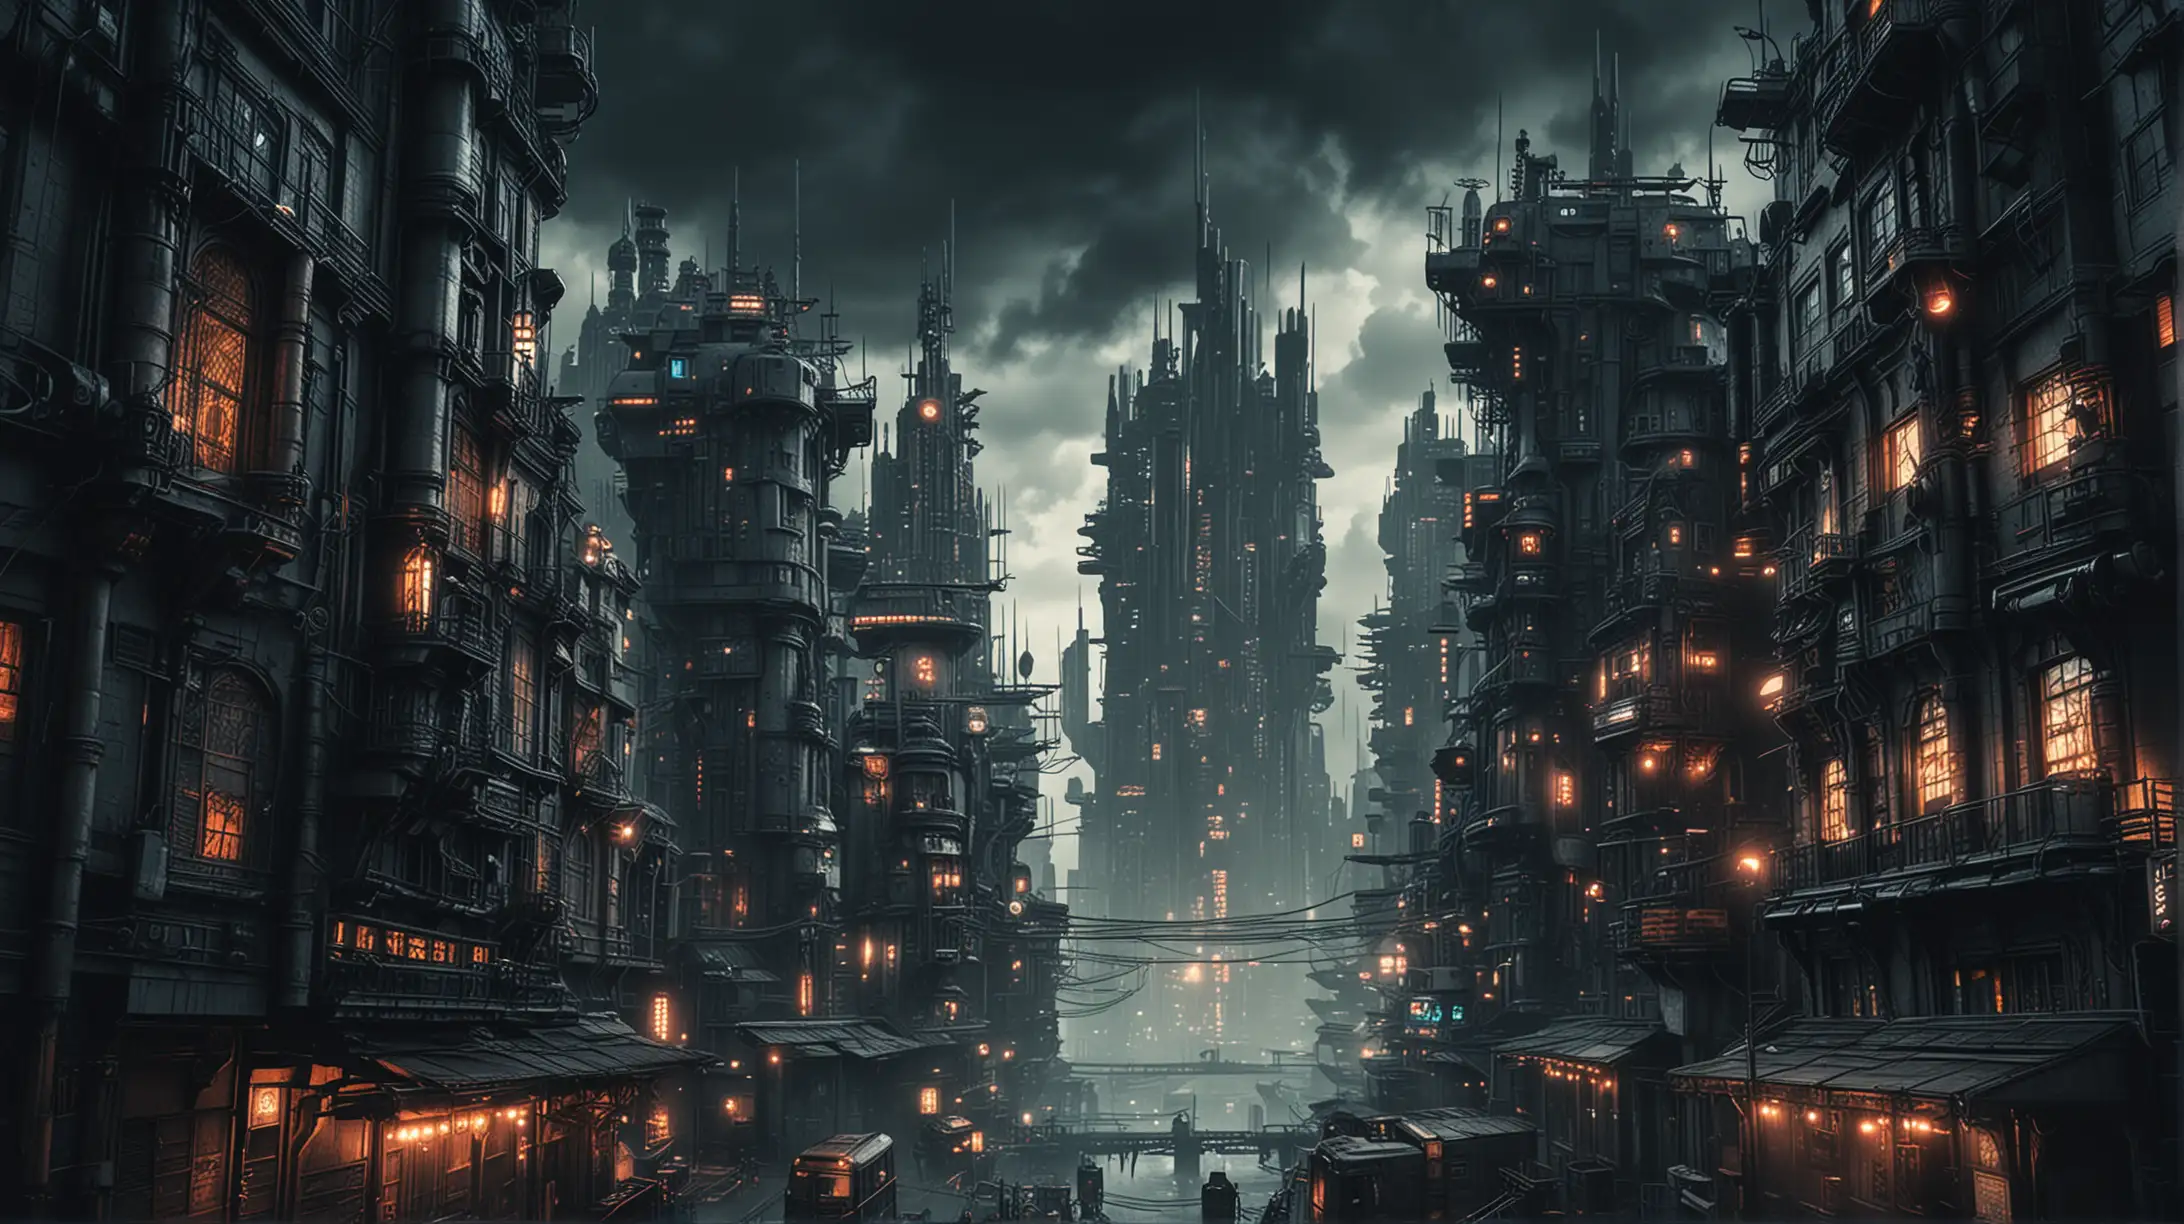 Futuristic Cyberpunk Cityscape with SteampunkInspired Architecture and Vibrant Illumination